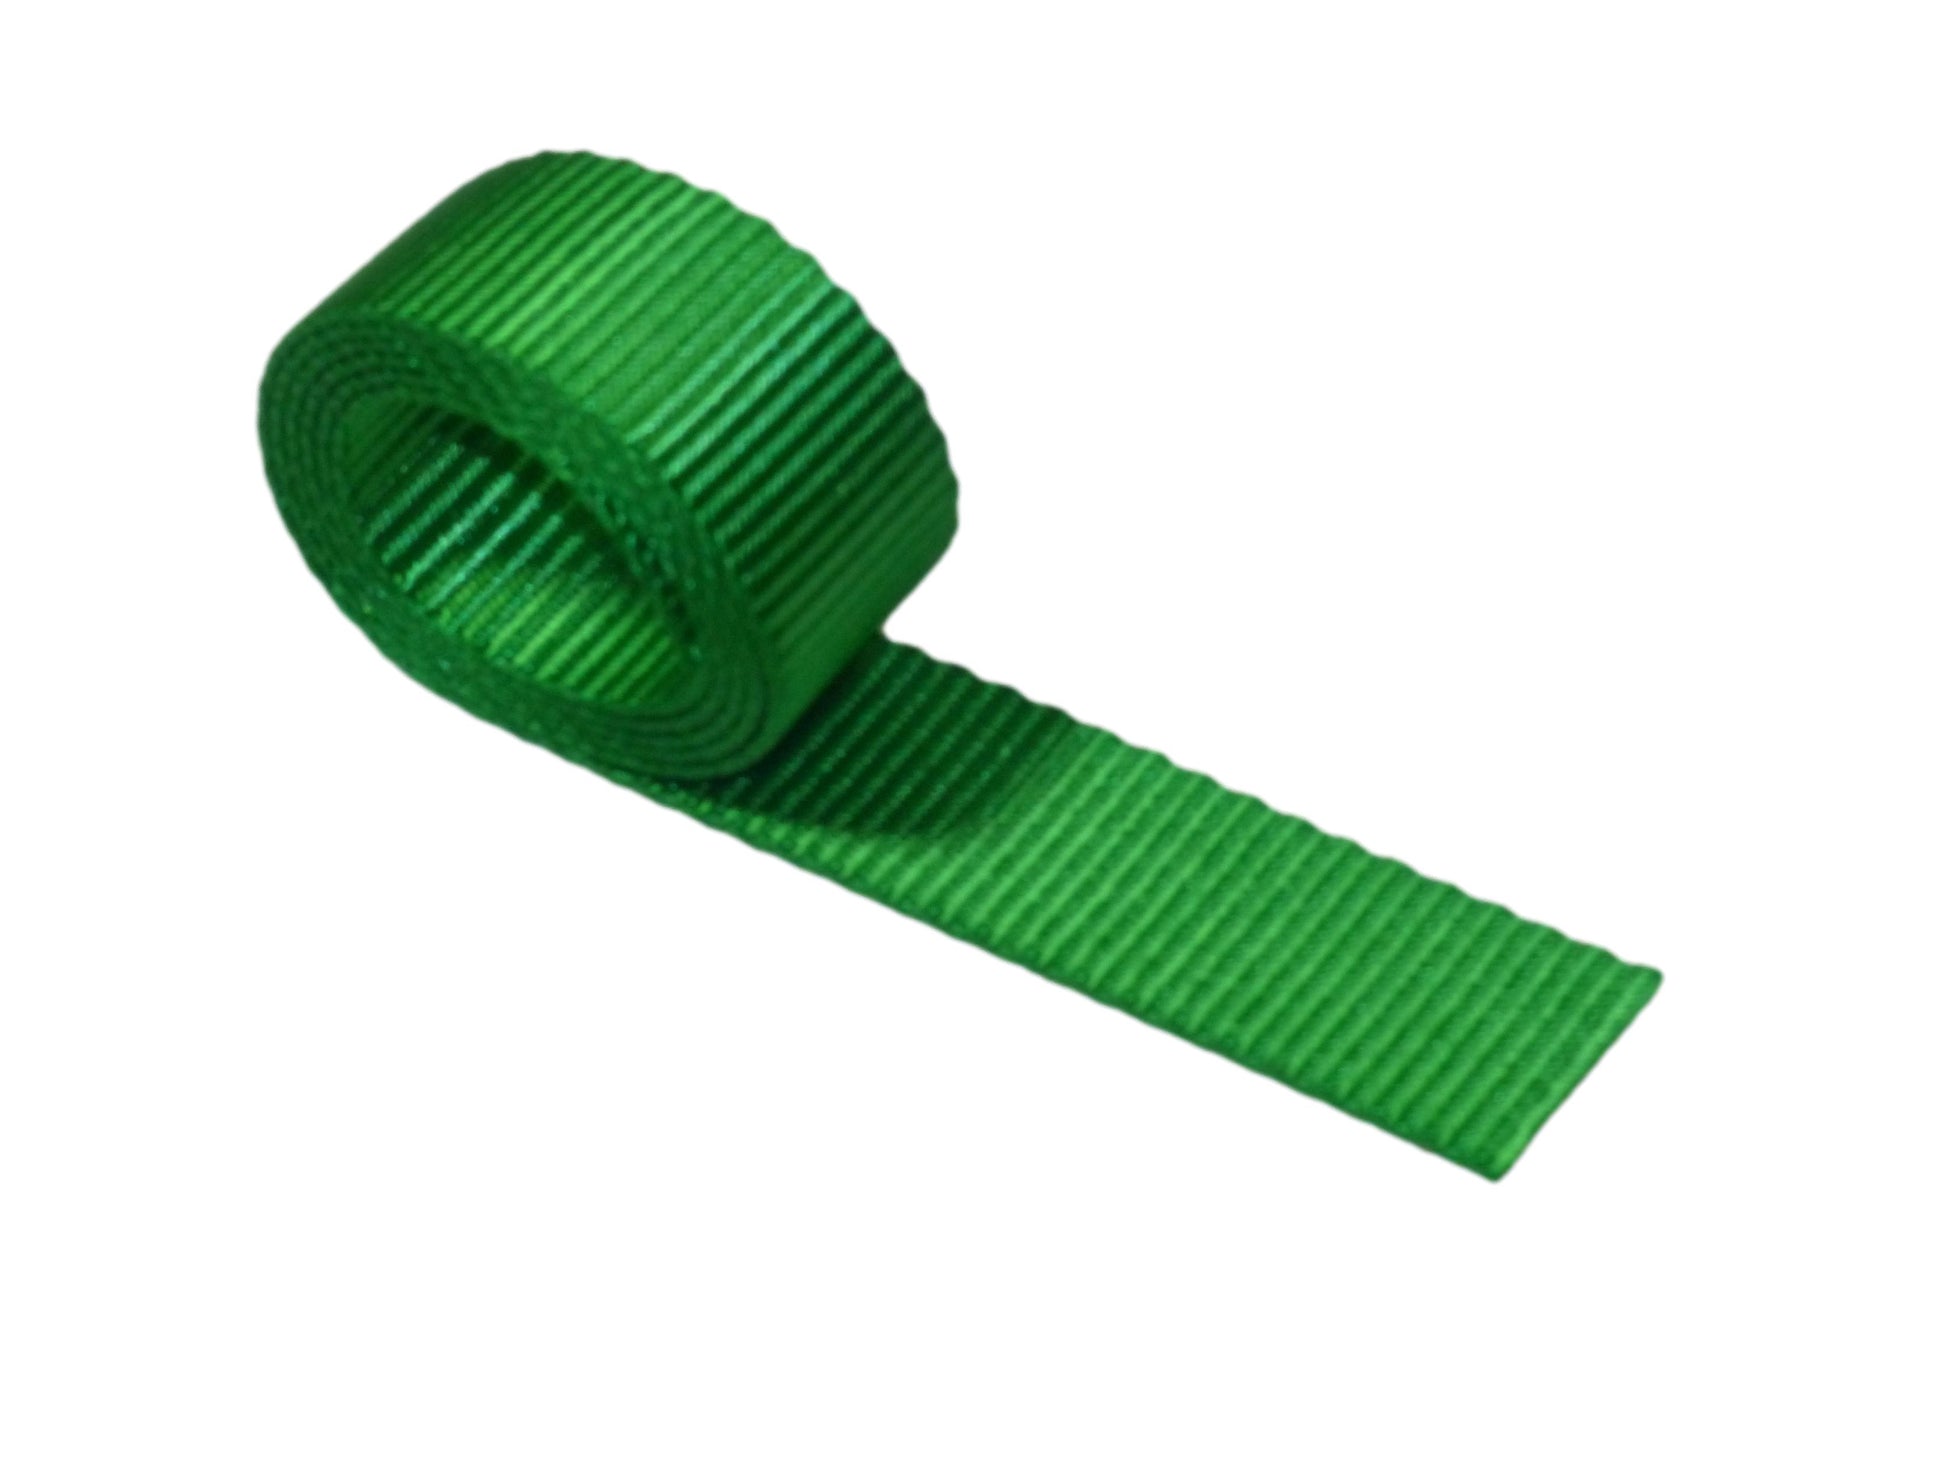 Benristraps 25mm Polyester Webbing in green